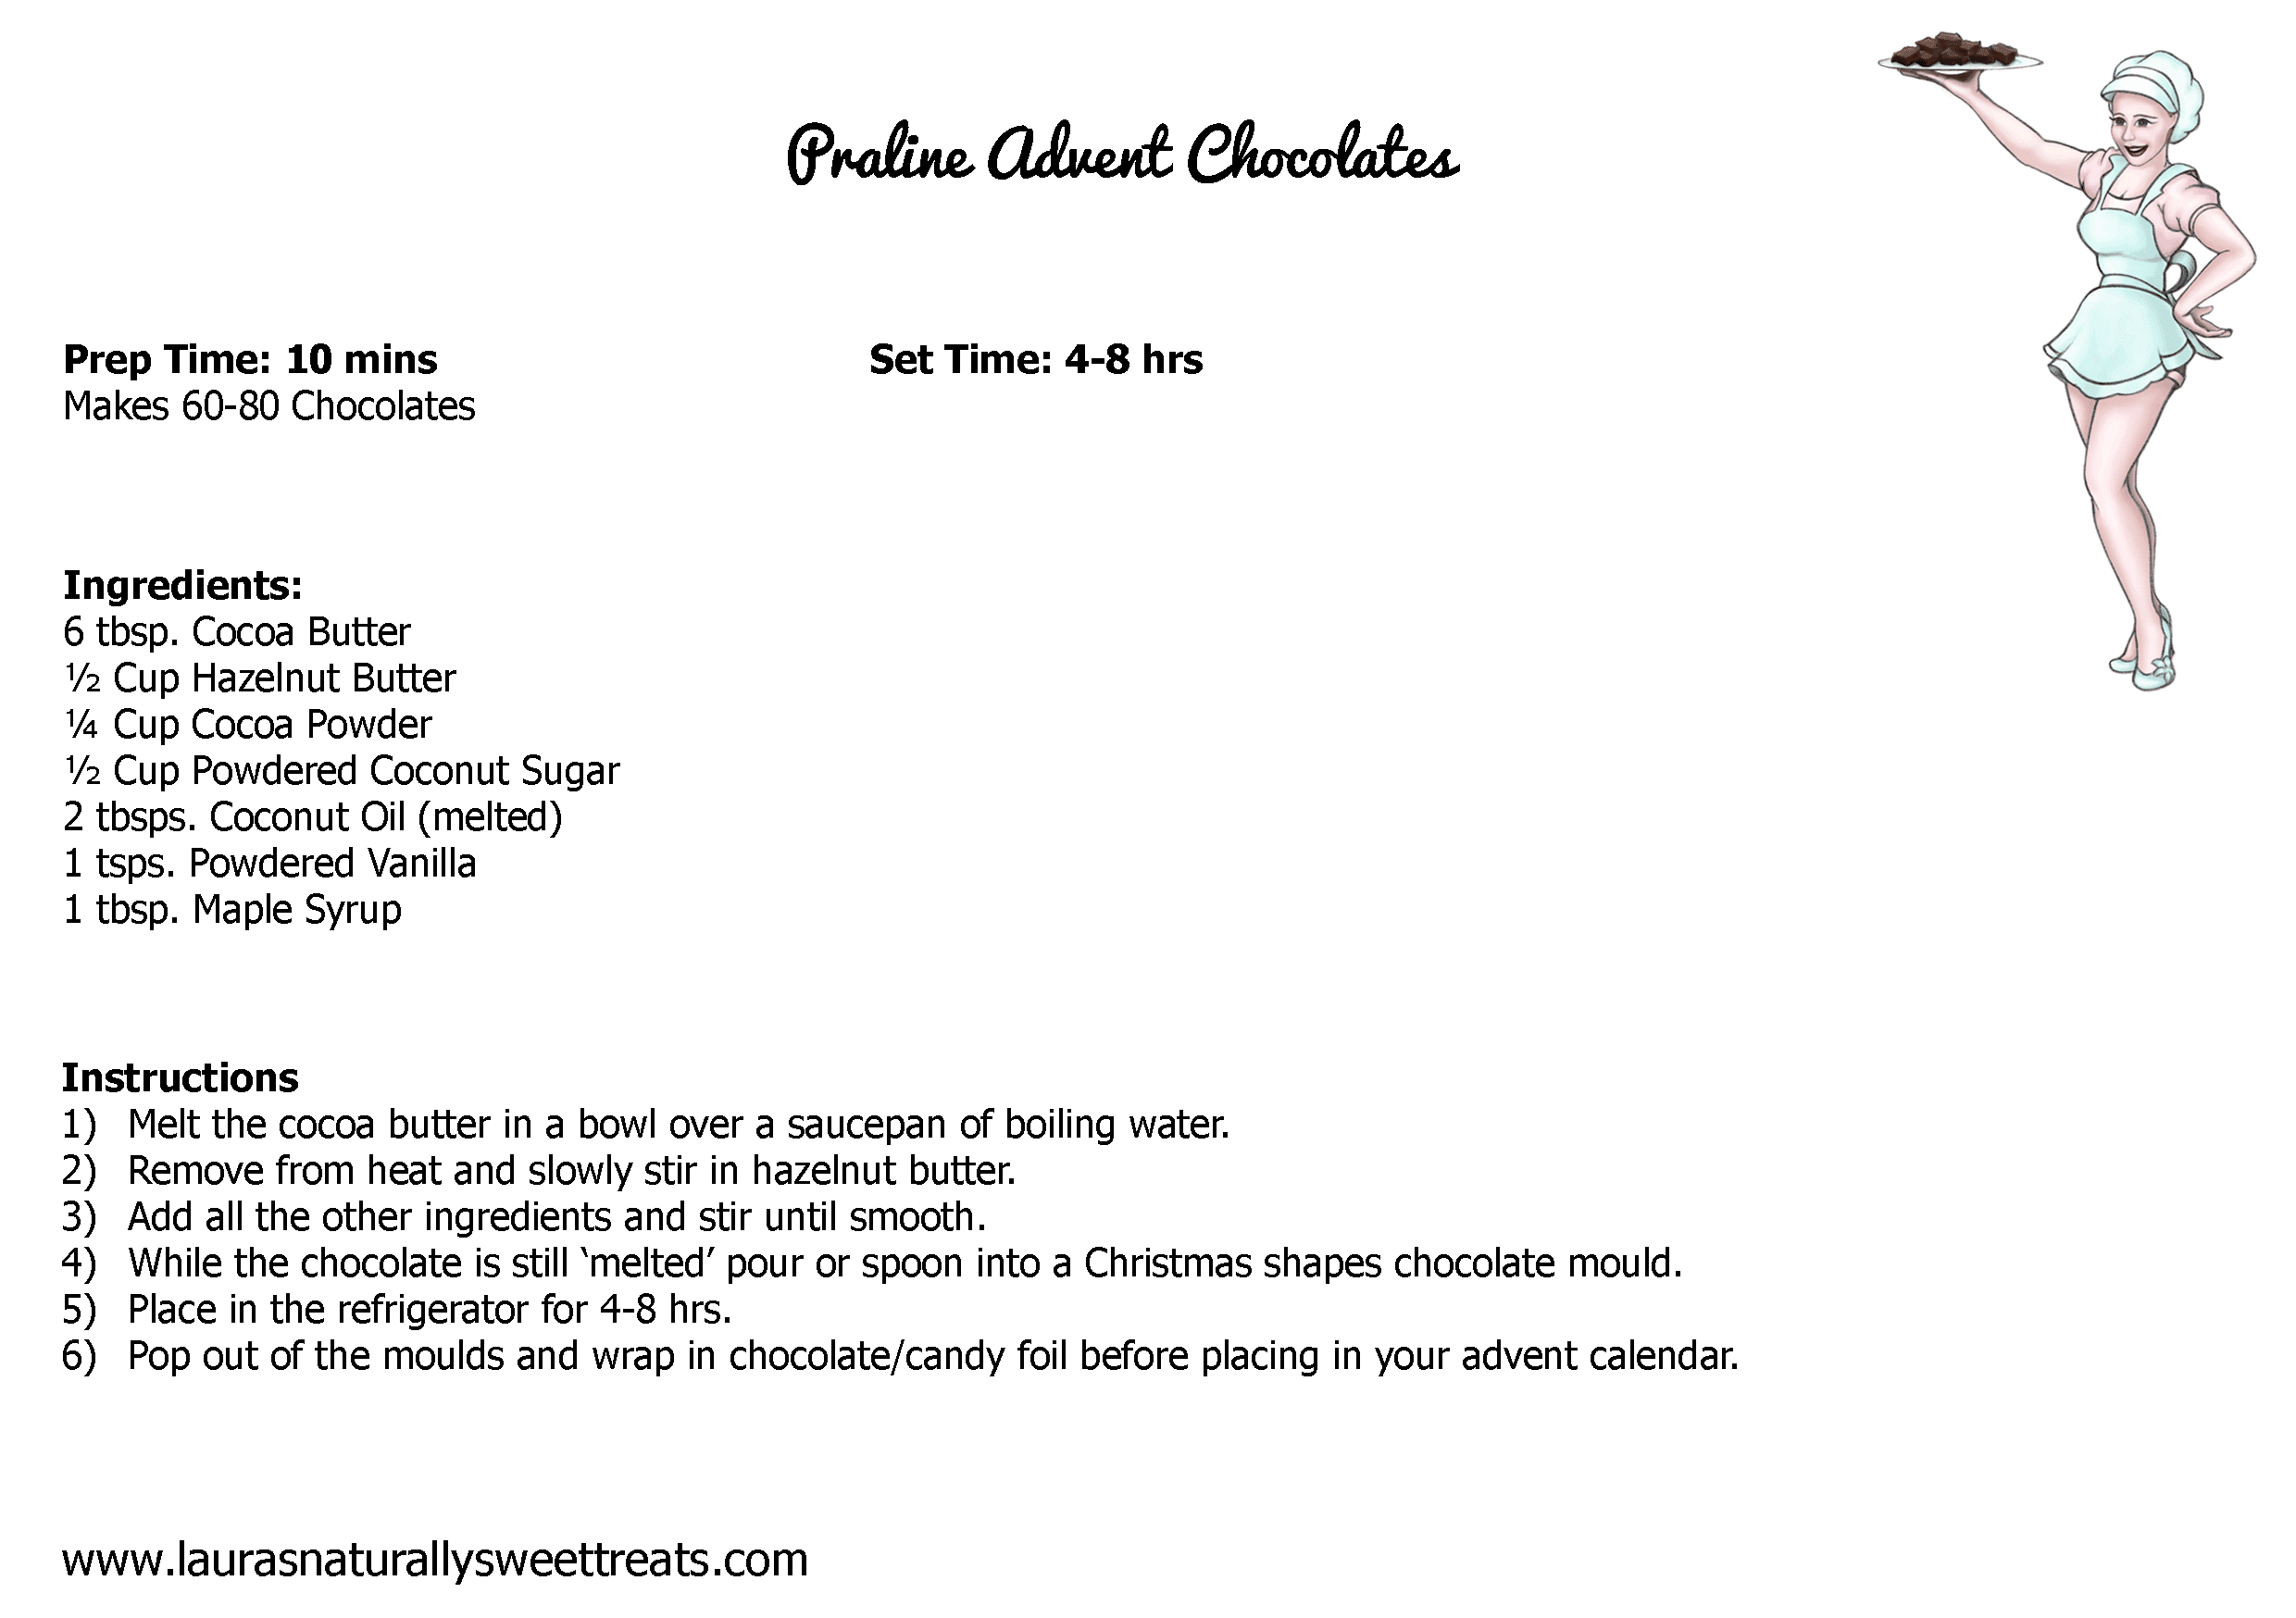 praline advent chocolate recipe card